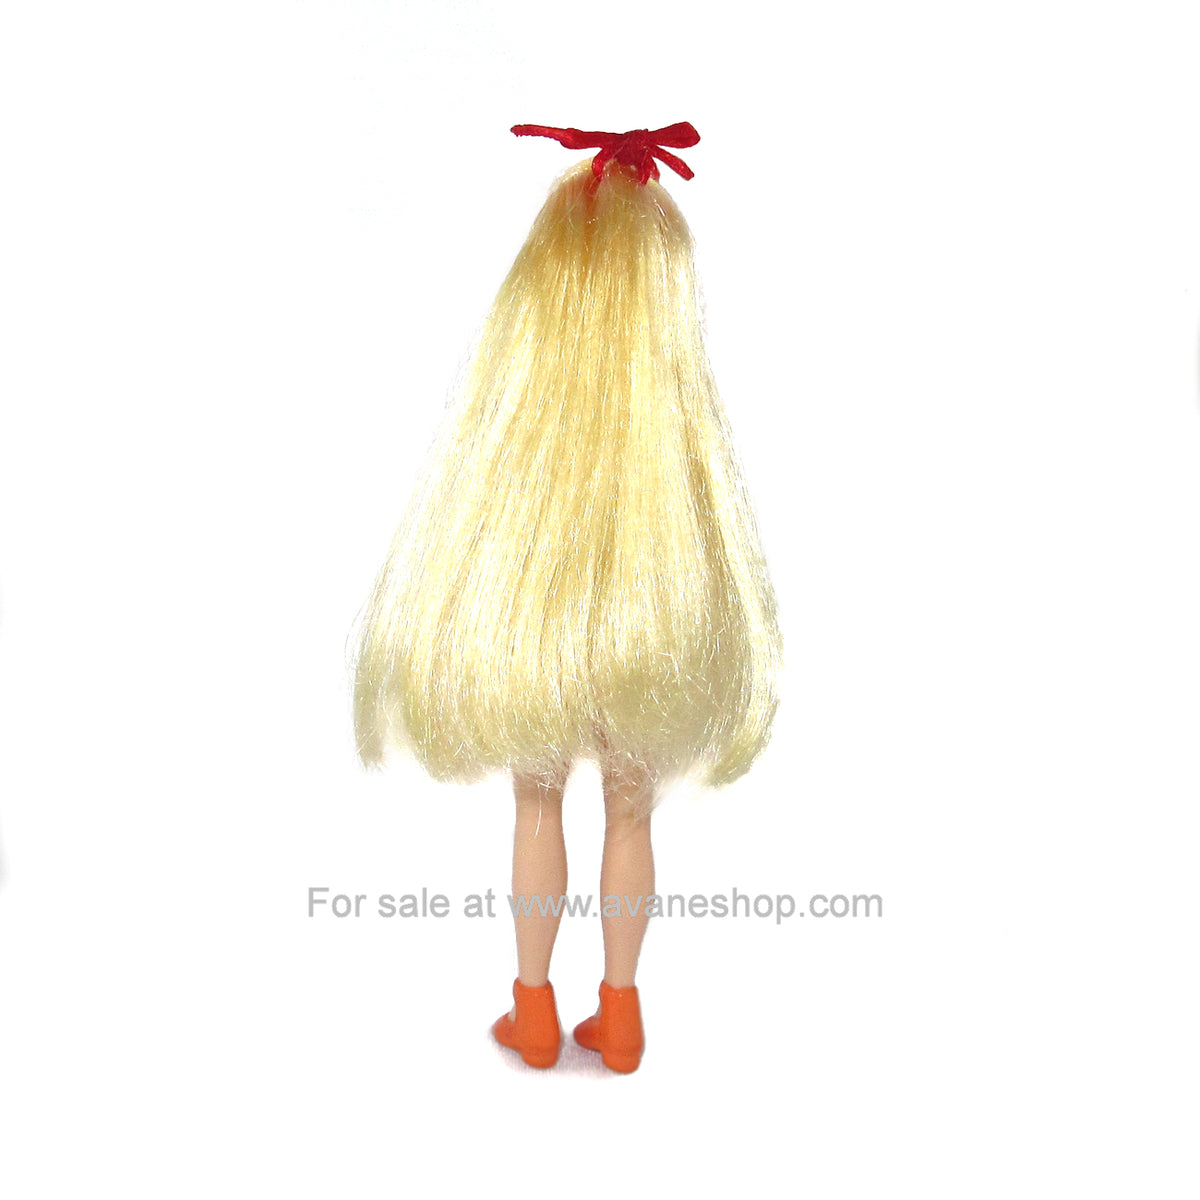 Sailor Moon Doll 6 inch Sailor Venus Doll for sale – Avane Shop